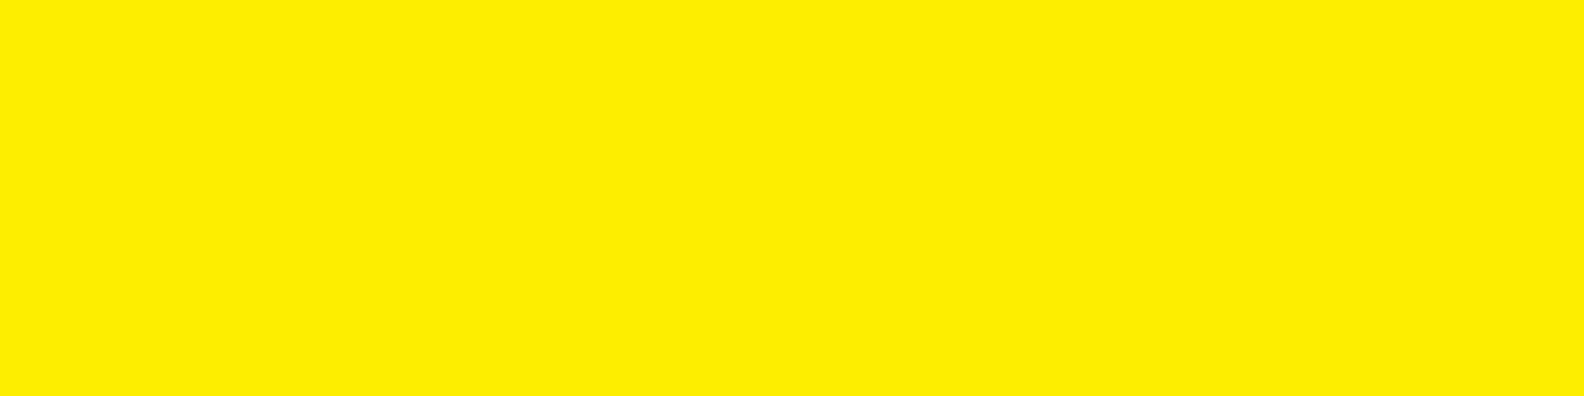 1584x396 Aureolin Solid Color Background